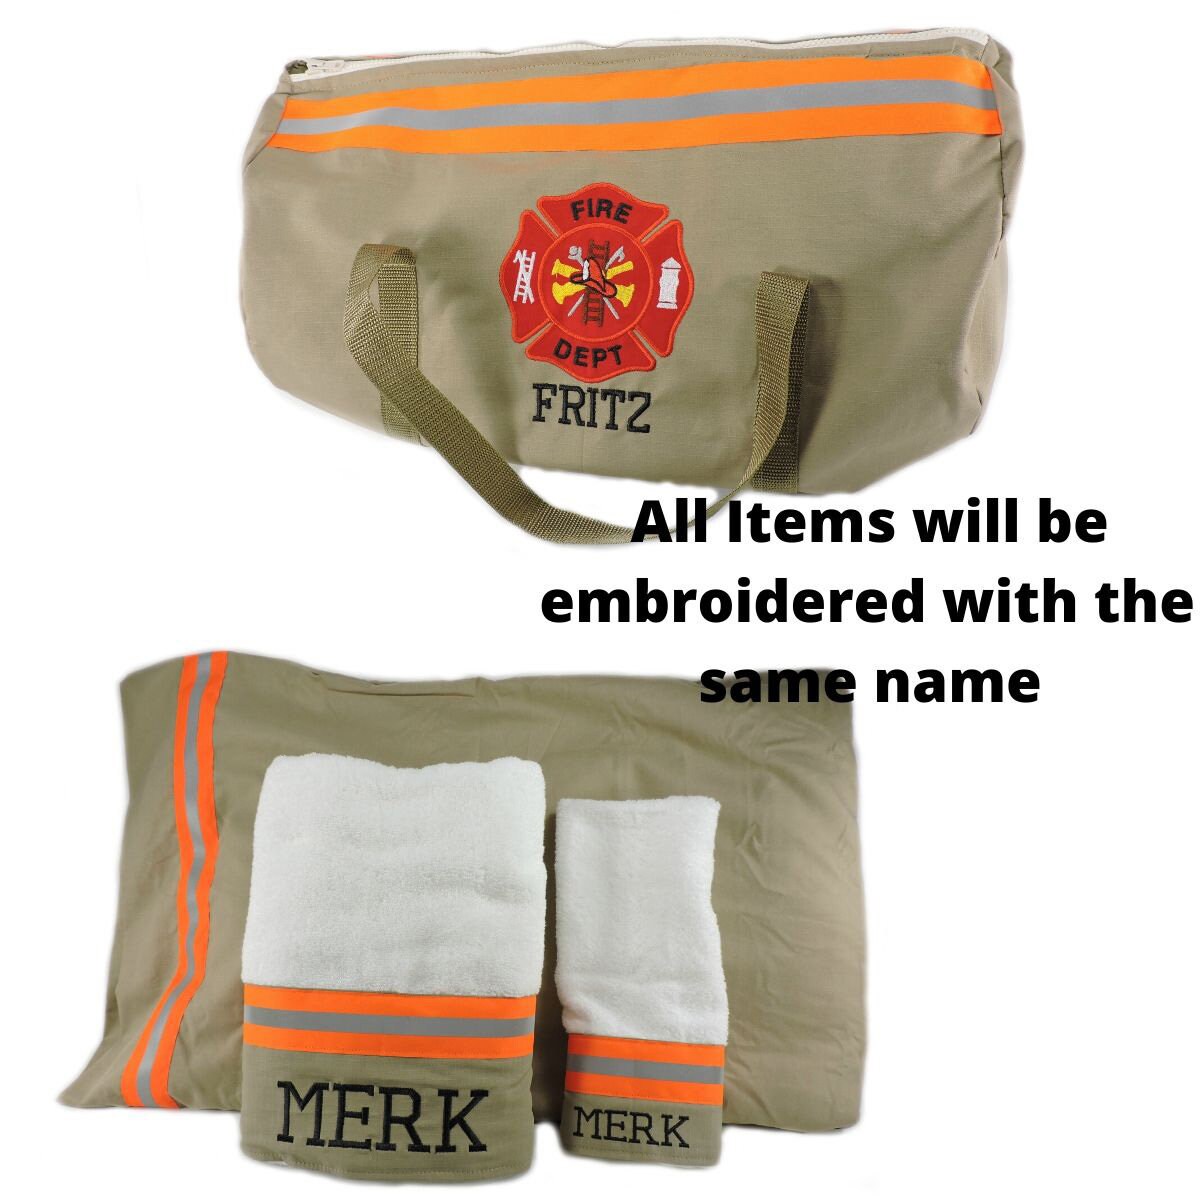 tan fabric neon orange tape firefighter duffel bag, pillowcase, bath and hand towel gift set